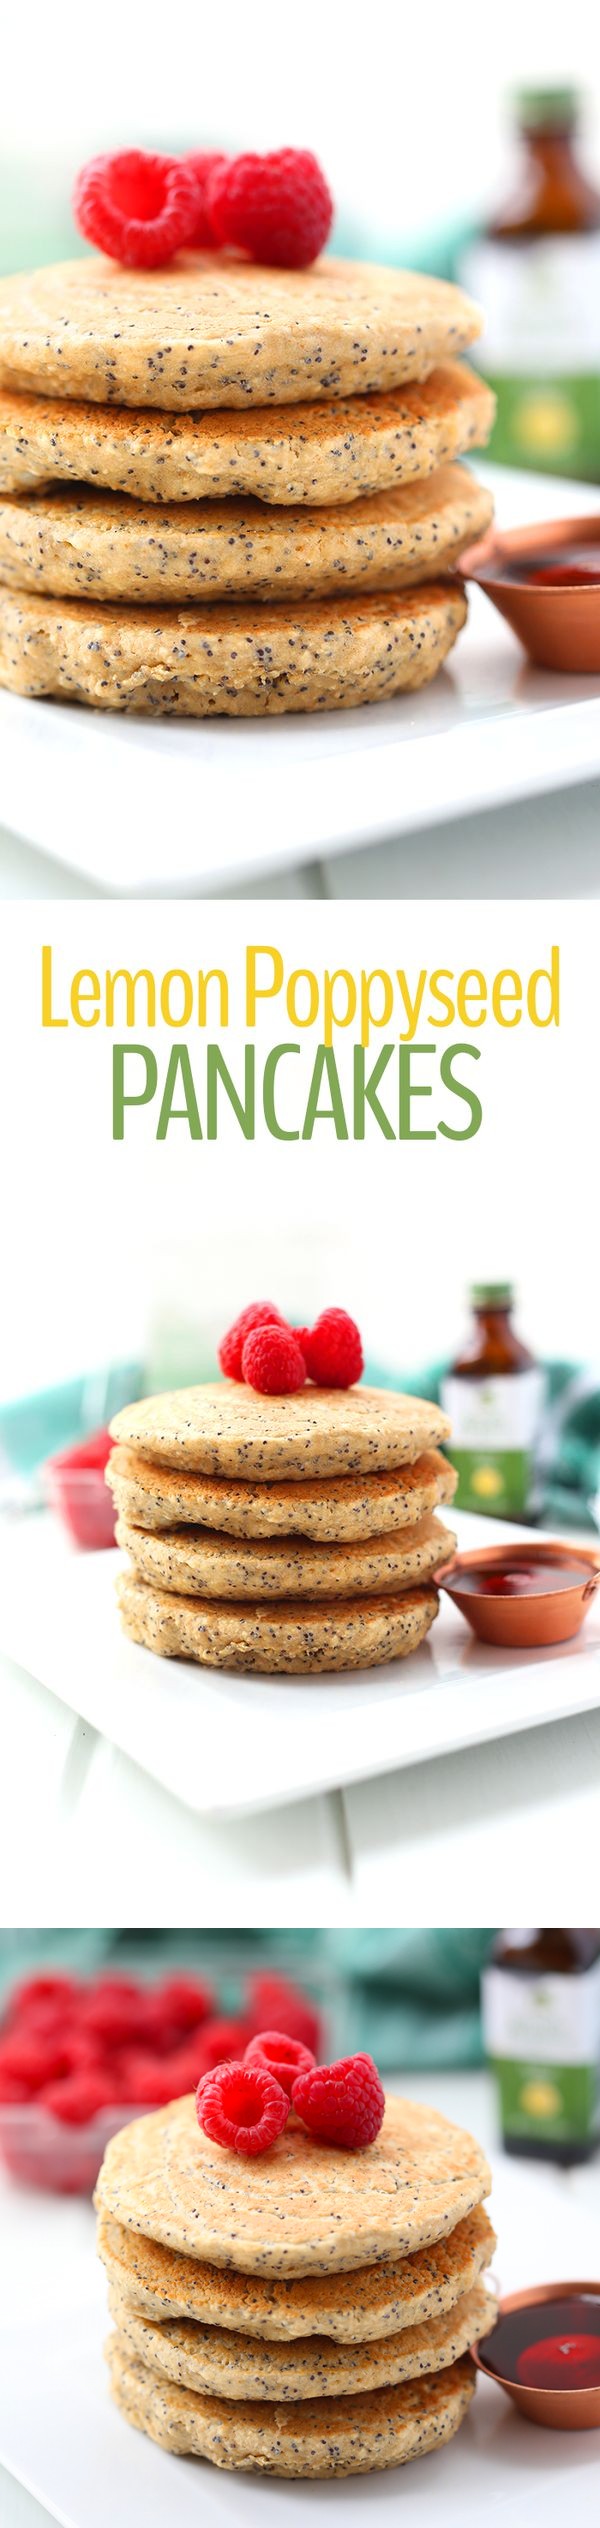 Lemon Poppyseed Pancakes